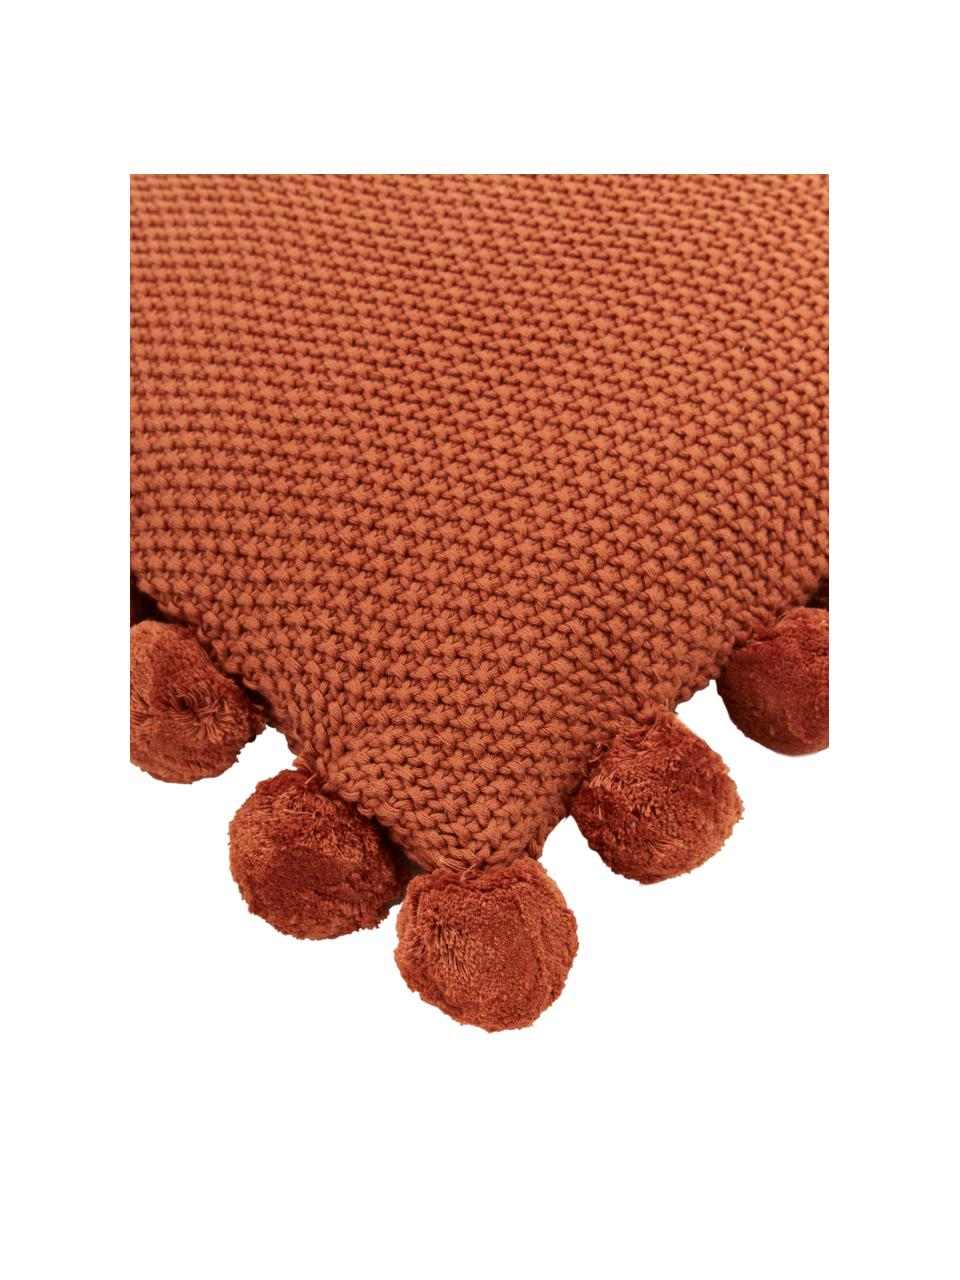 Gebreide kussenhoes Molly in roestkleurig met pompoms, 100% katoen, Terracotta, B 40 x L 40 cm